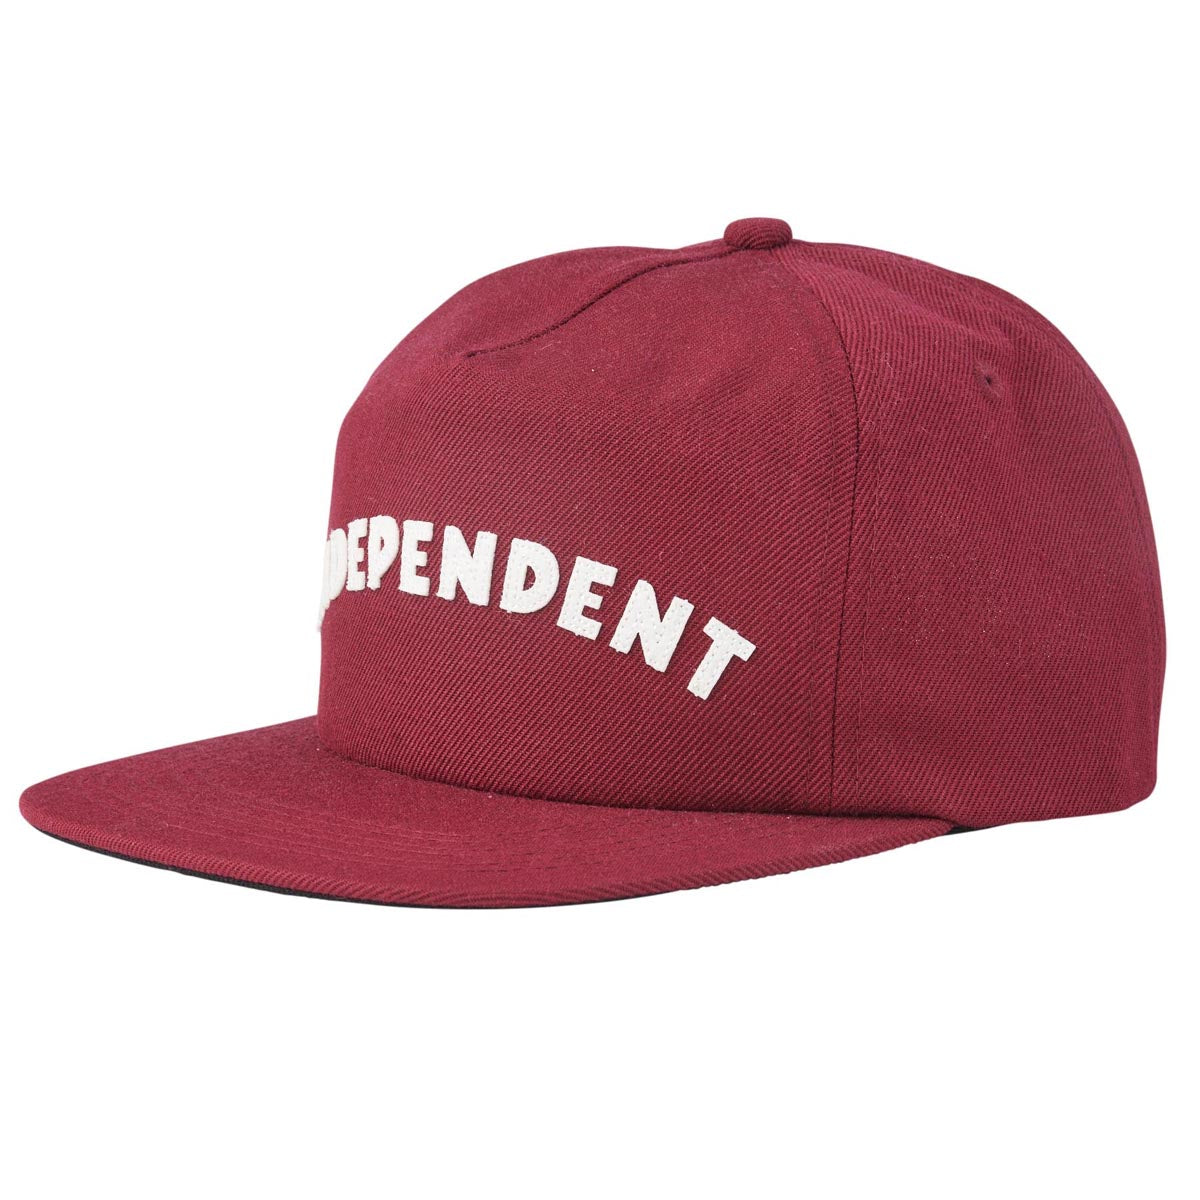 Independent Brigade Strapback Unstructured Hat - Cardinal image 1